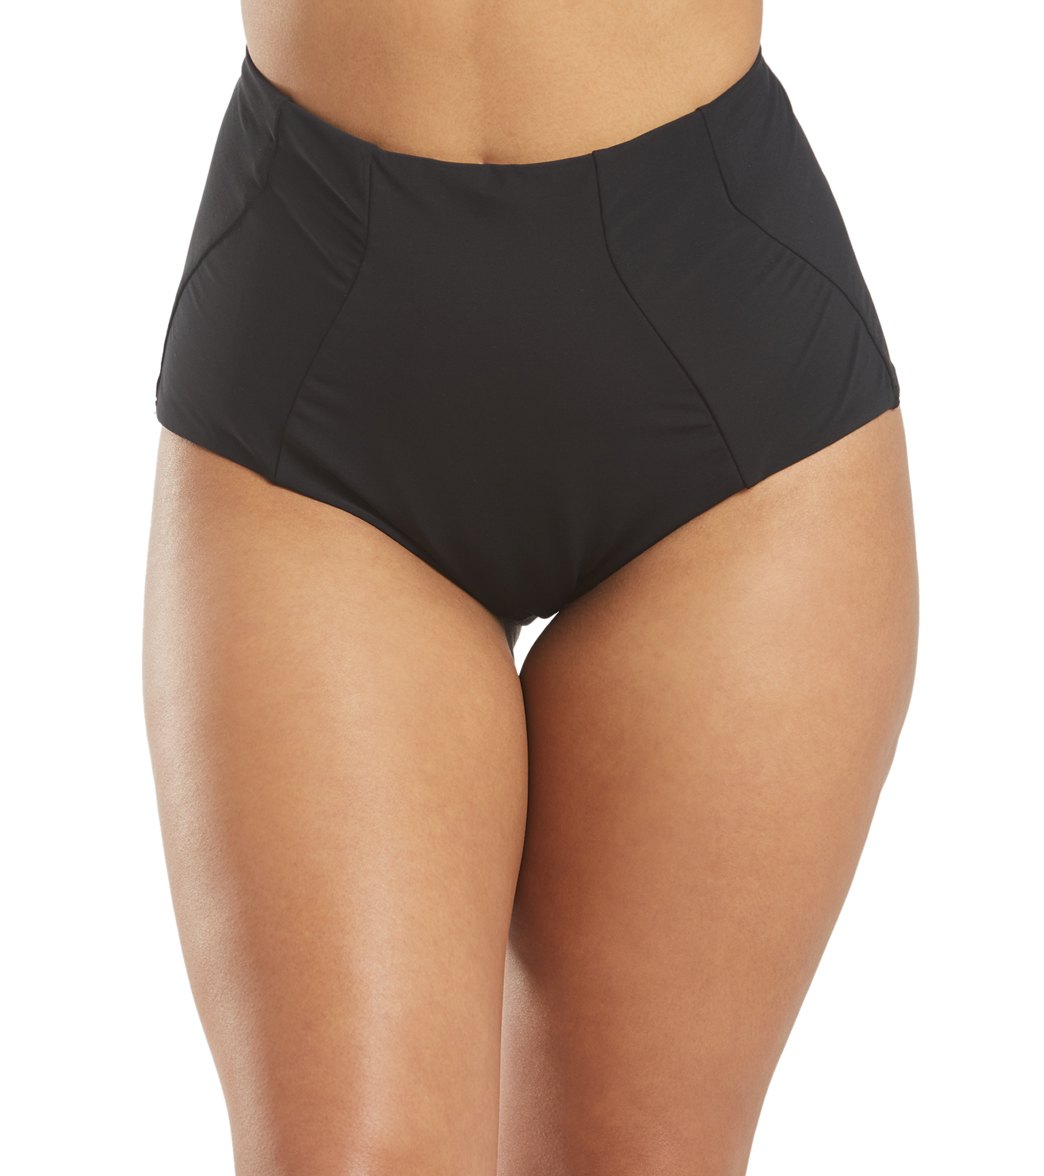 Jets Swimwear Australia Conspire High Waist Bikini Bottom at SwimOutlet.com